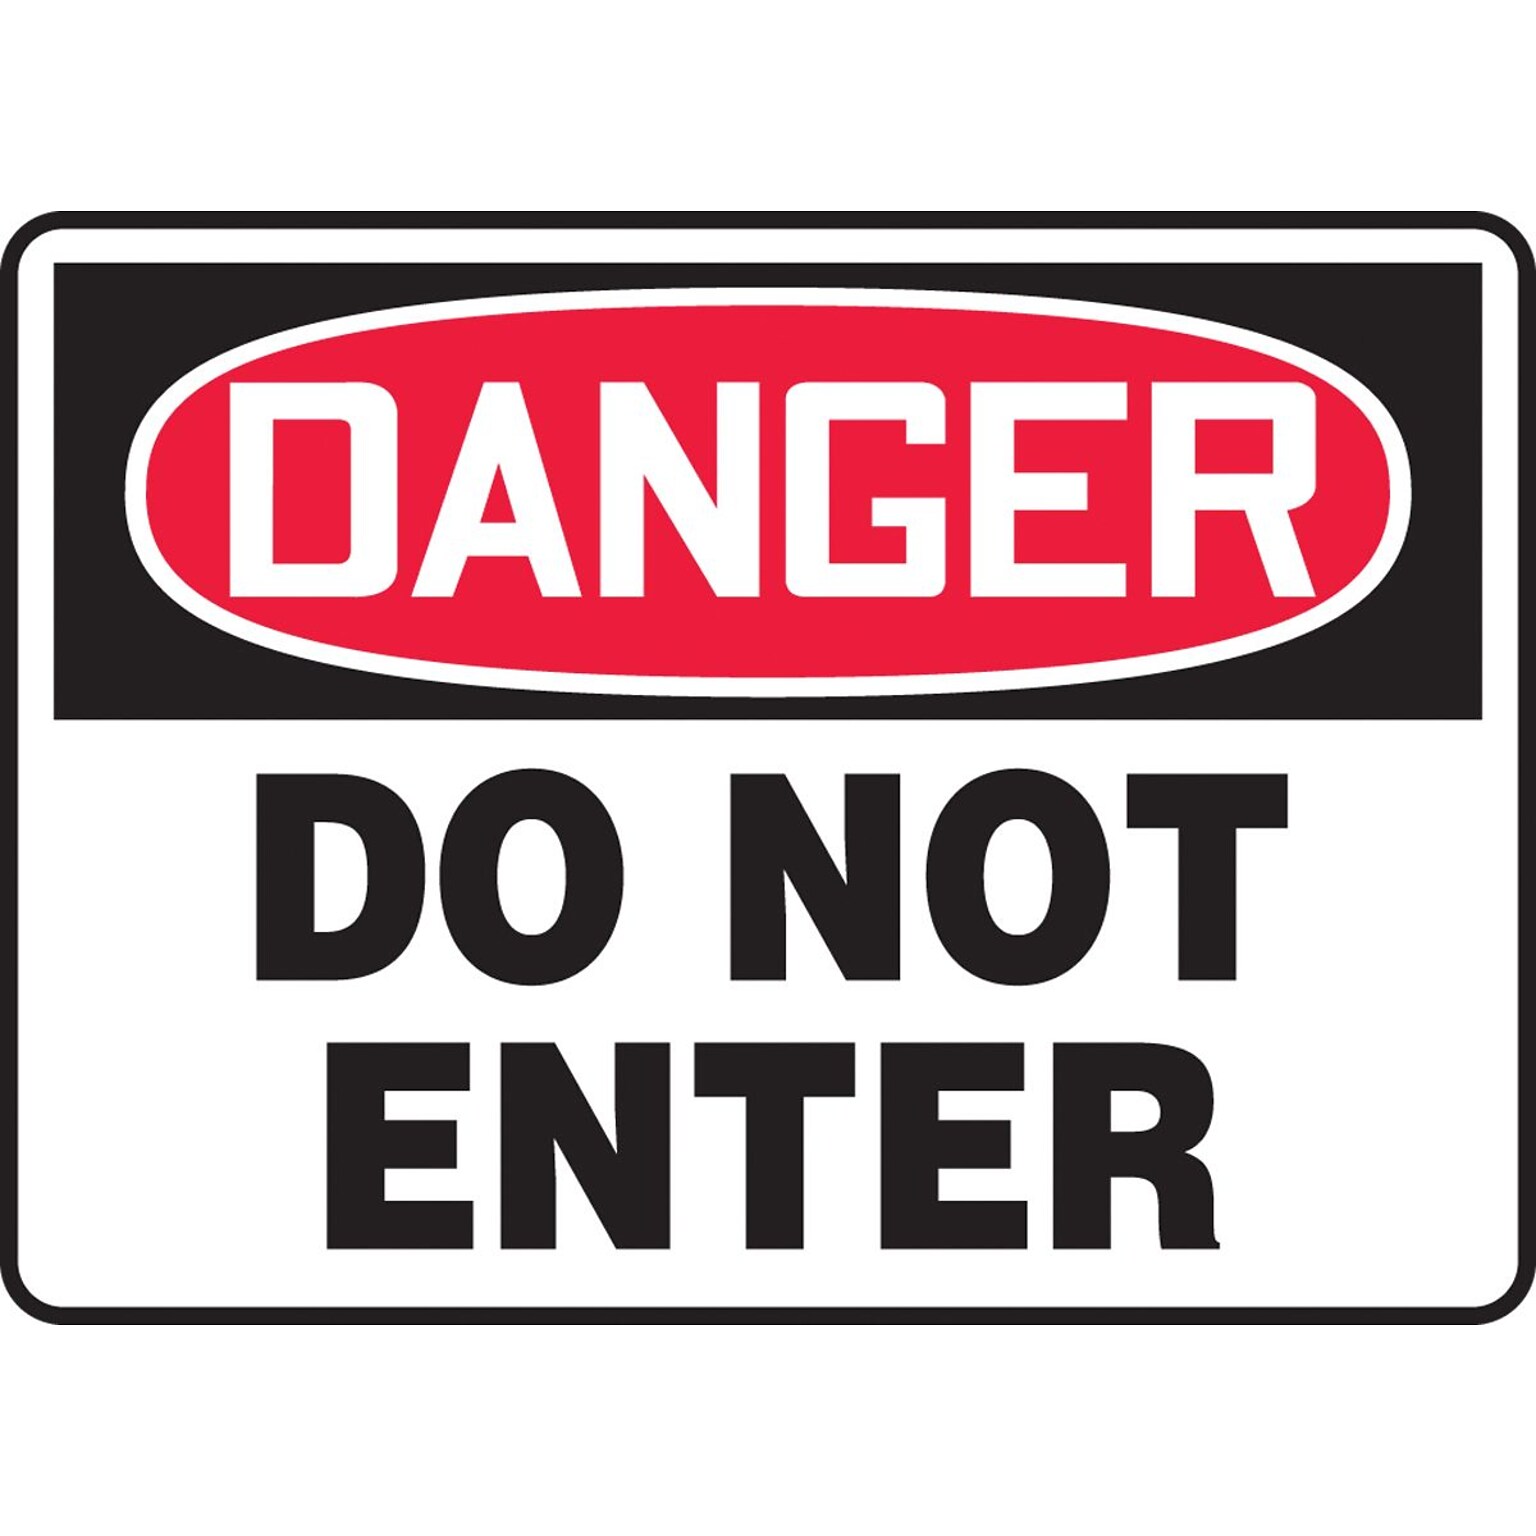 Accuform 7 x 10 Plastic Safety Sign DANGER DO NOT ENTER, Red/Black On White (MADM138VP)